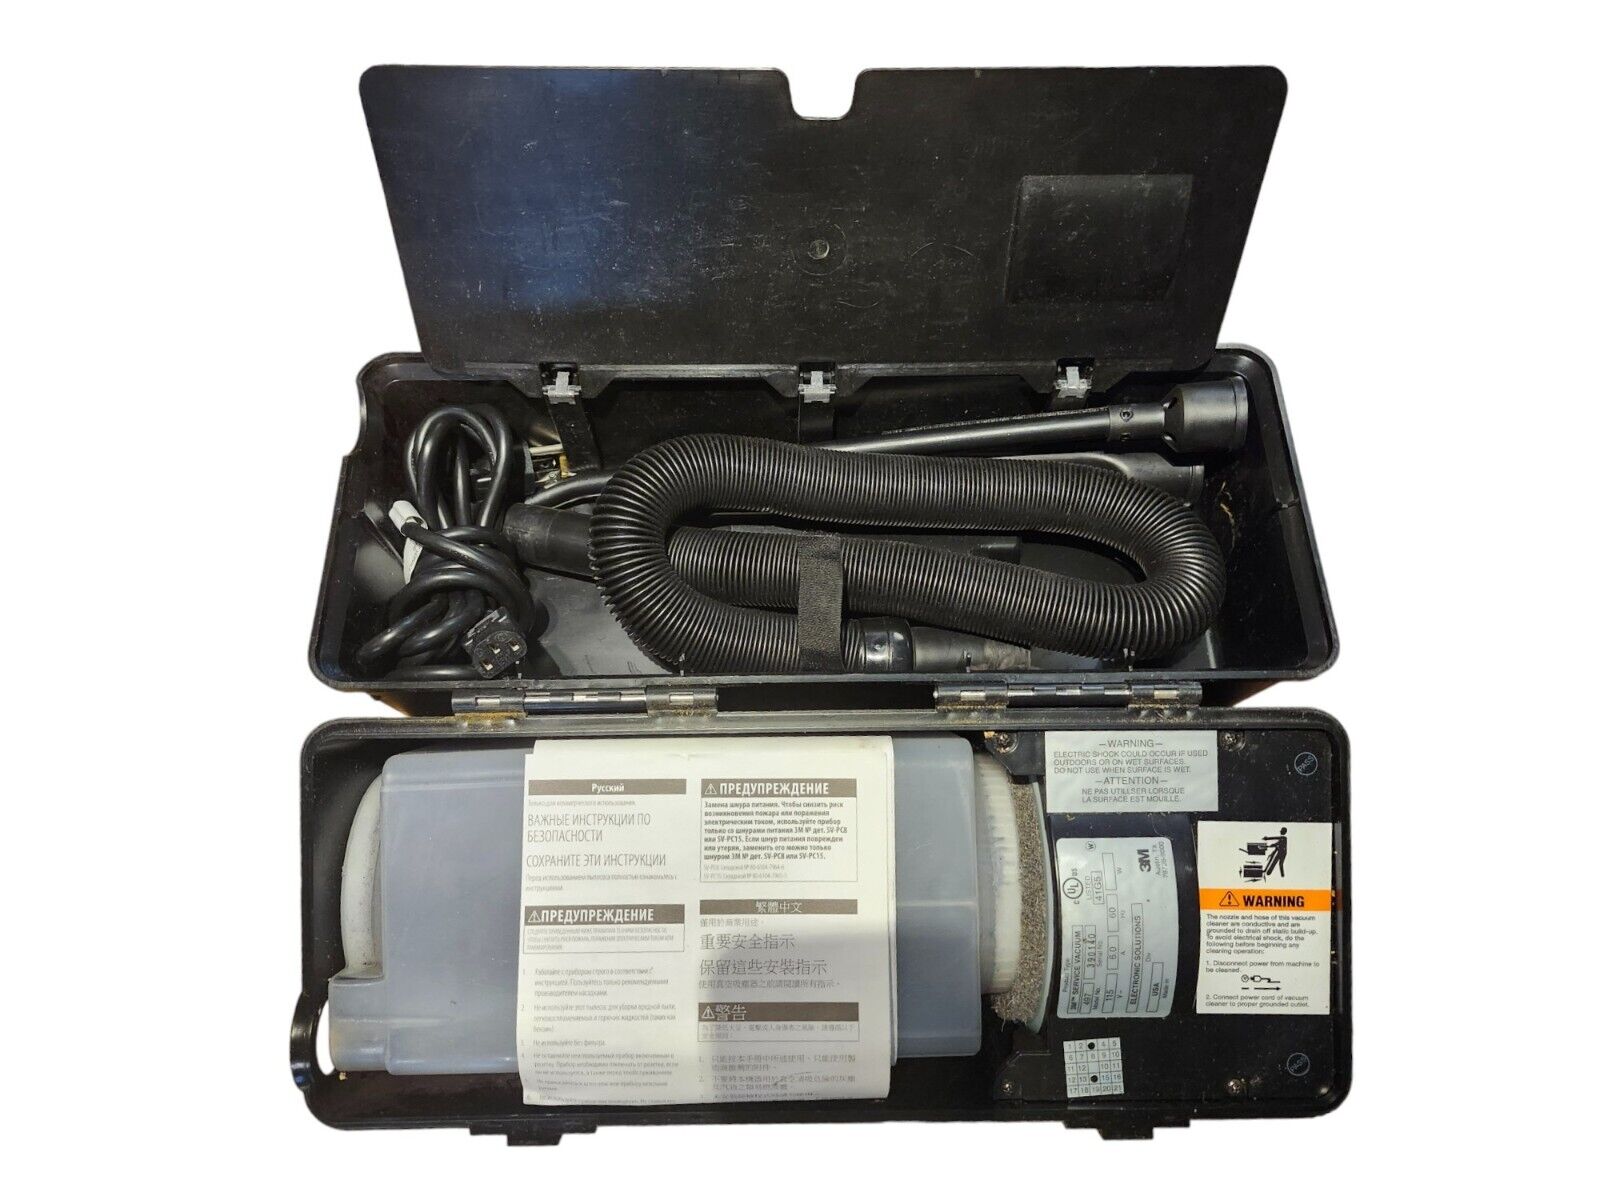 3M Electronics Vacuum Model No. 497 Toner & Dust w/Accessories Field Service